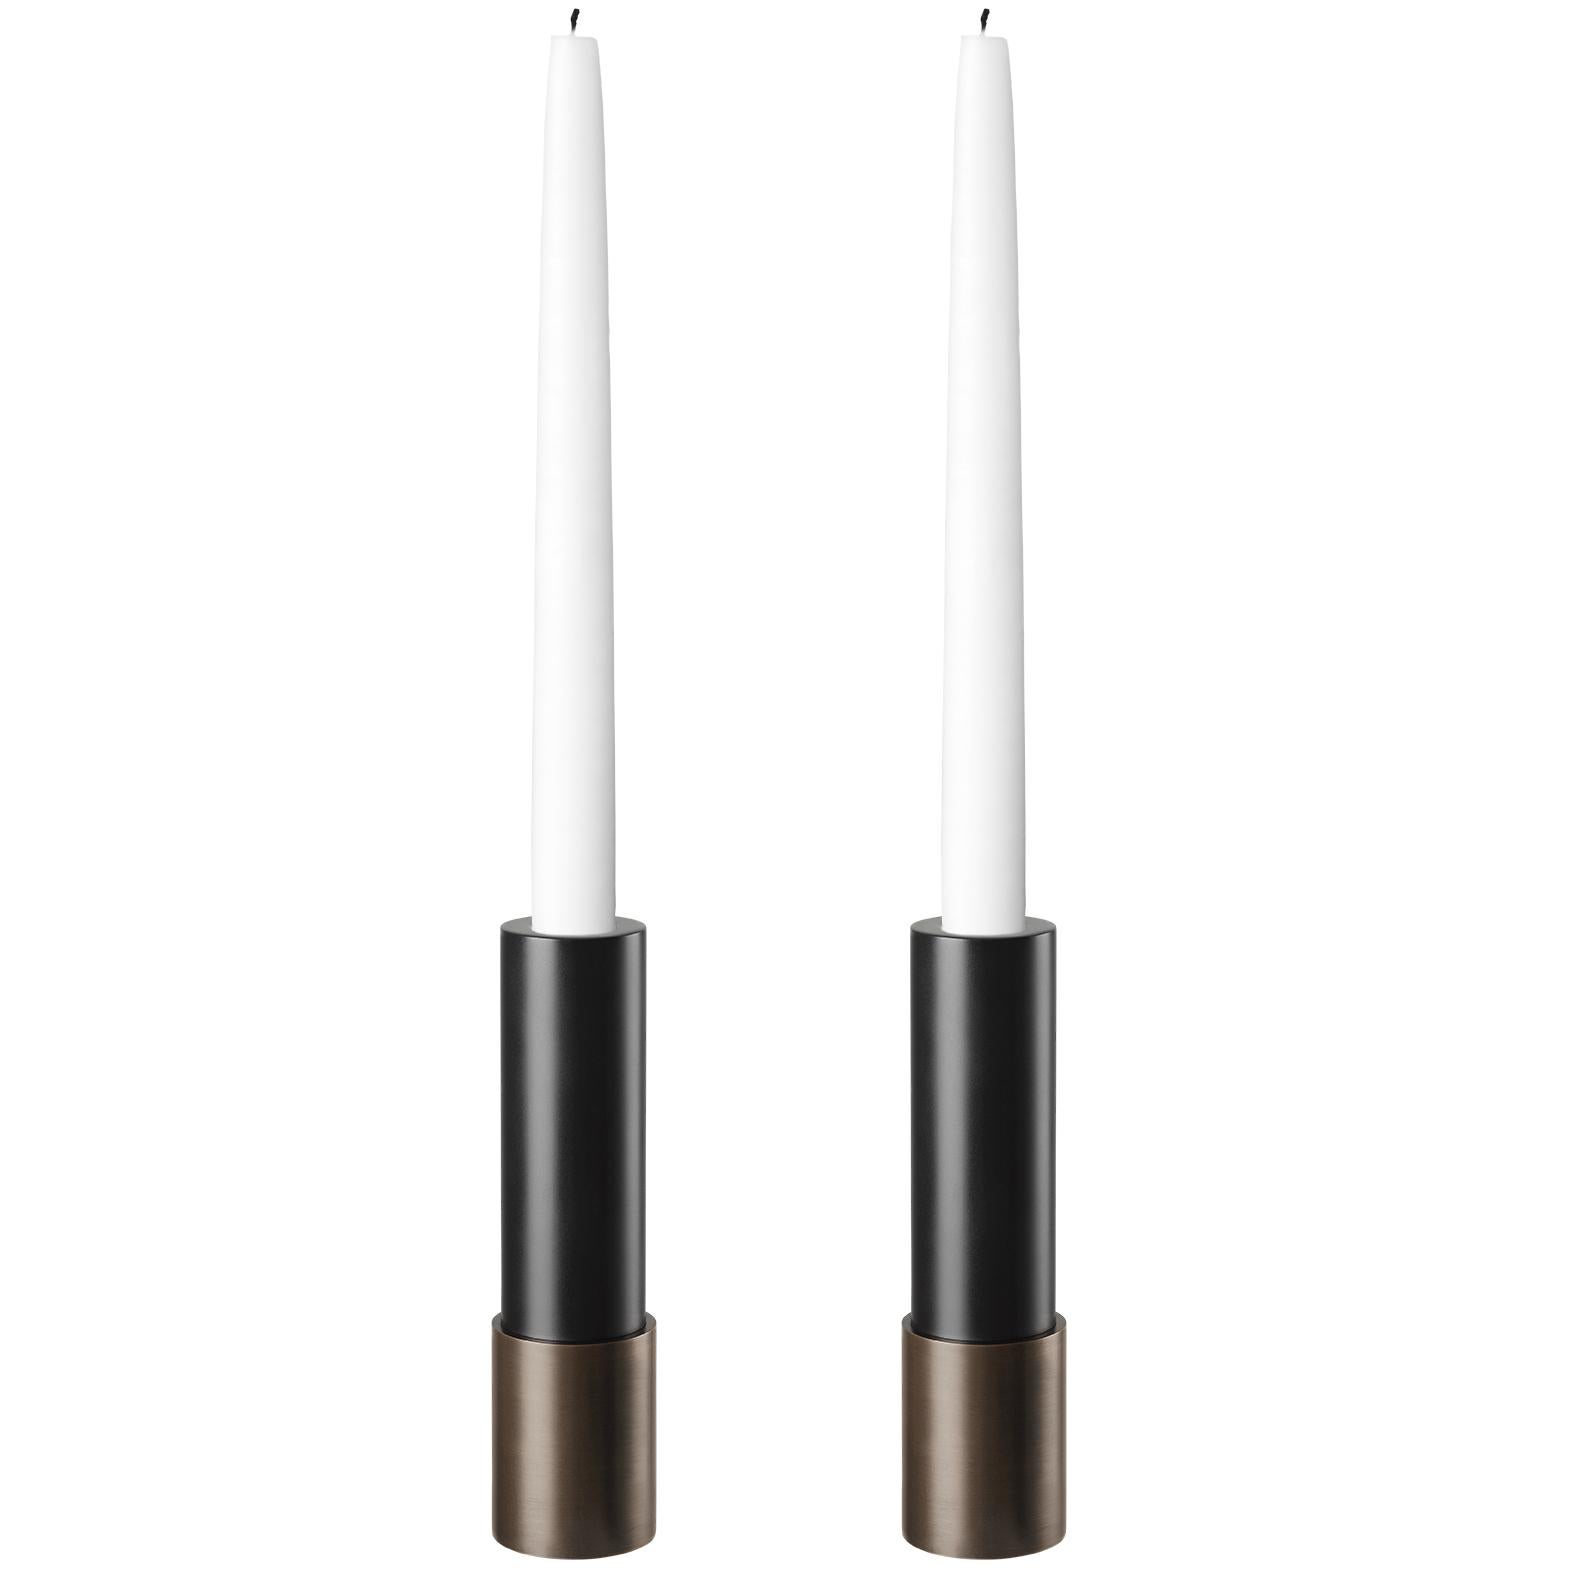 Pair of Candlesticks Model #20 by Space Copenhagen for GUBI For Sale 8